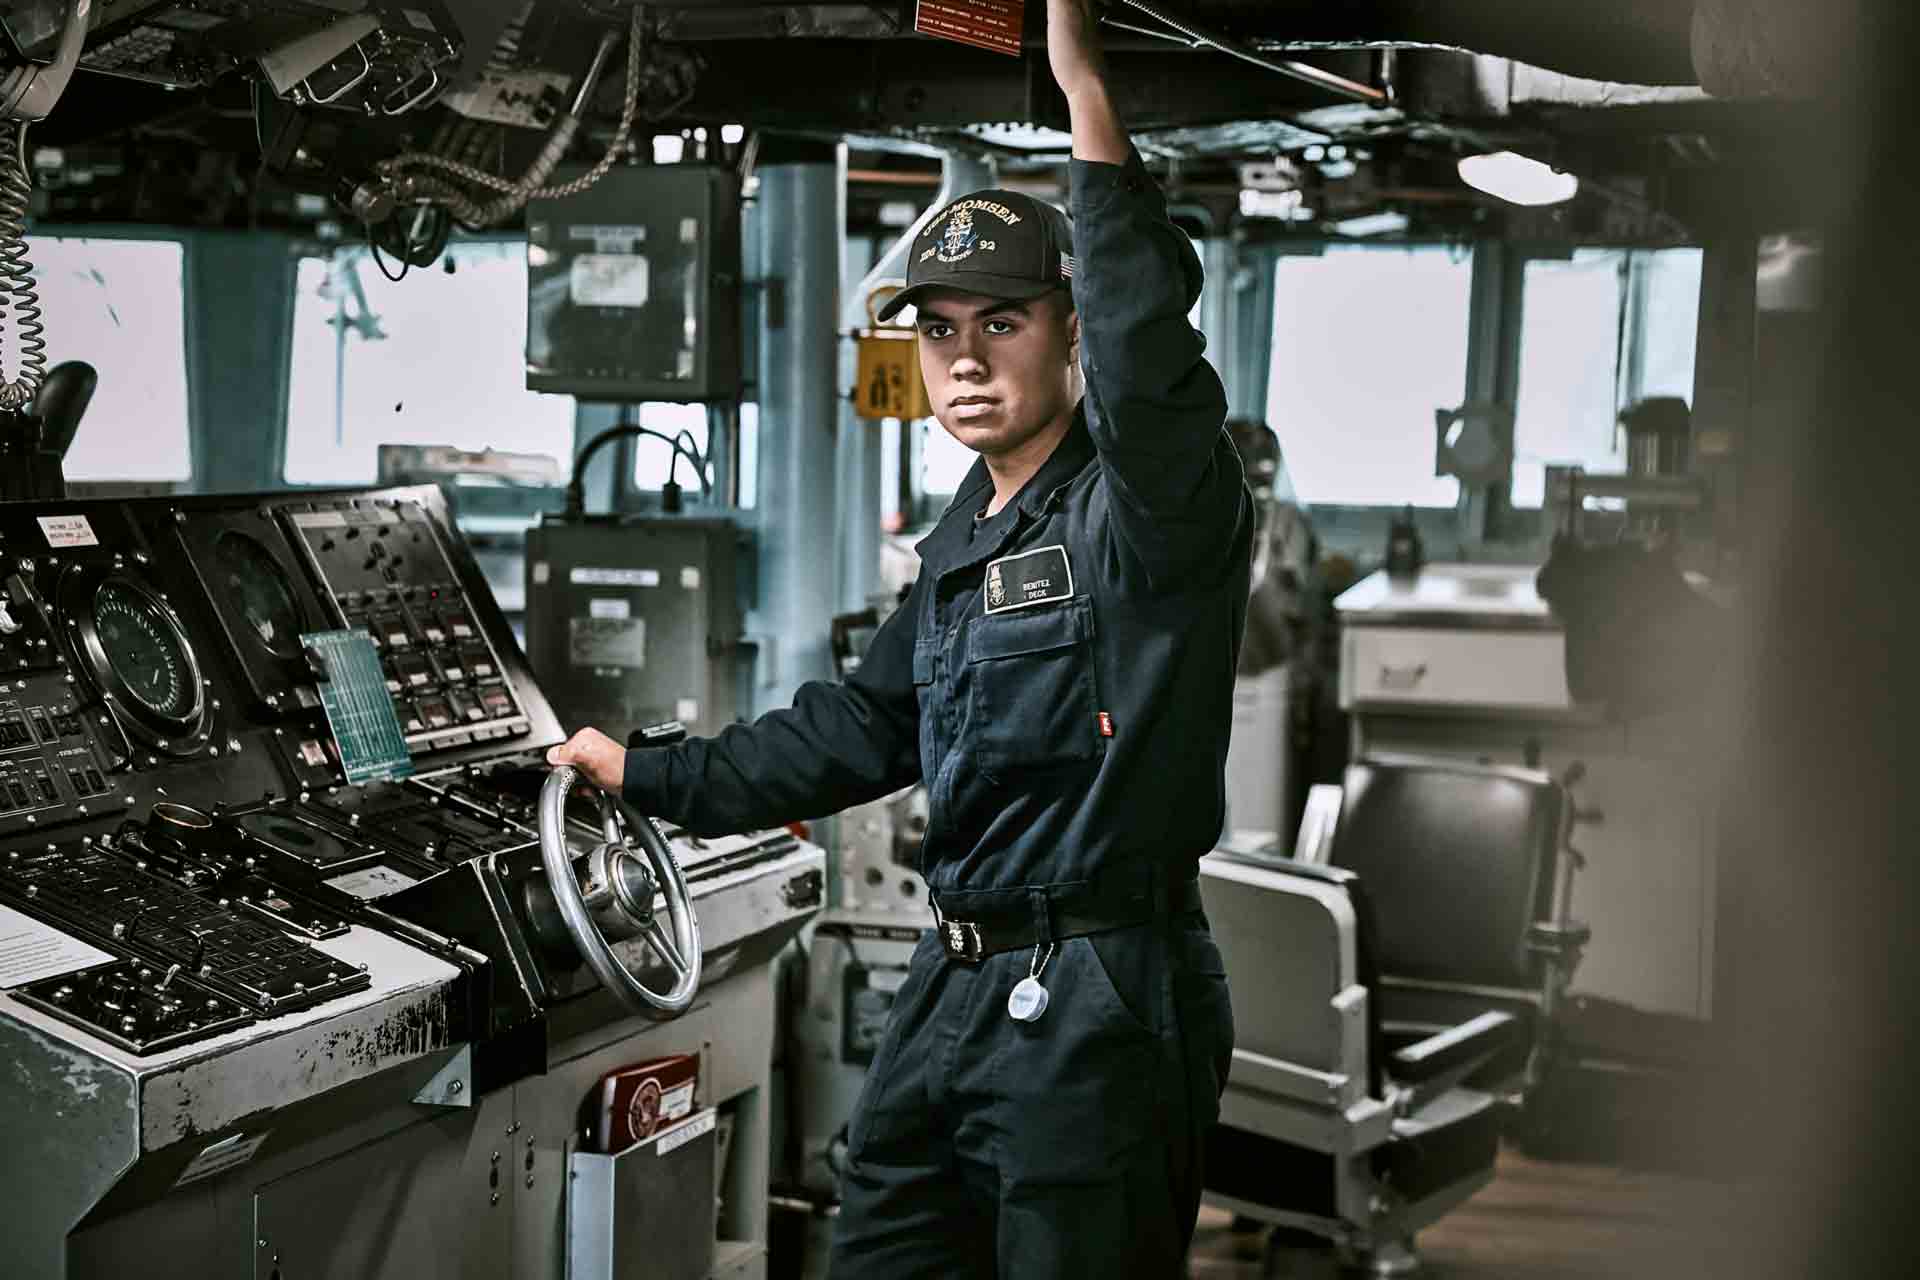 U.S. Navy Sailor Michael Benitez operates navigational equipment aboard a Navy ship